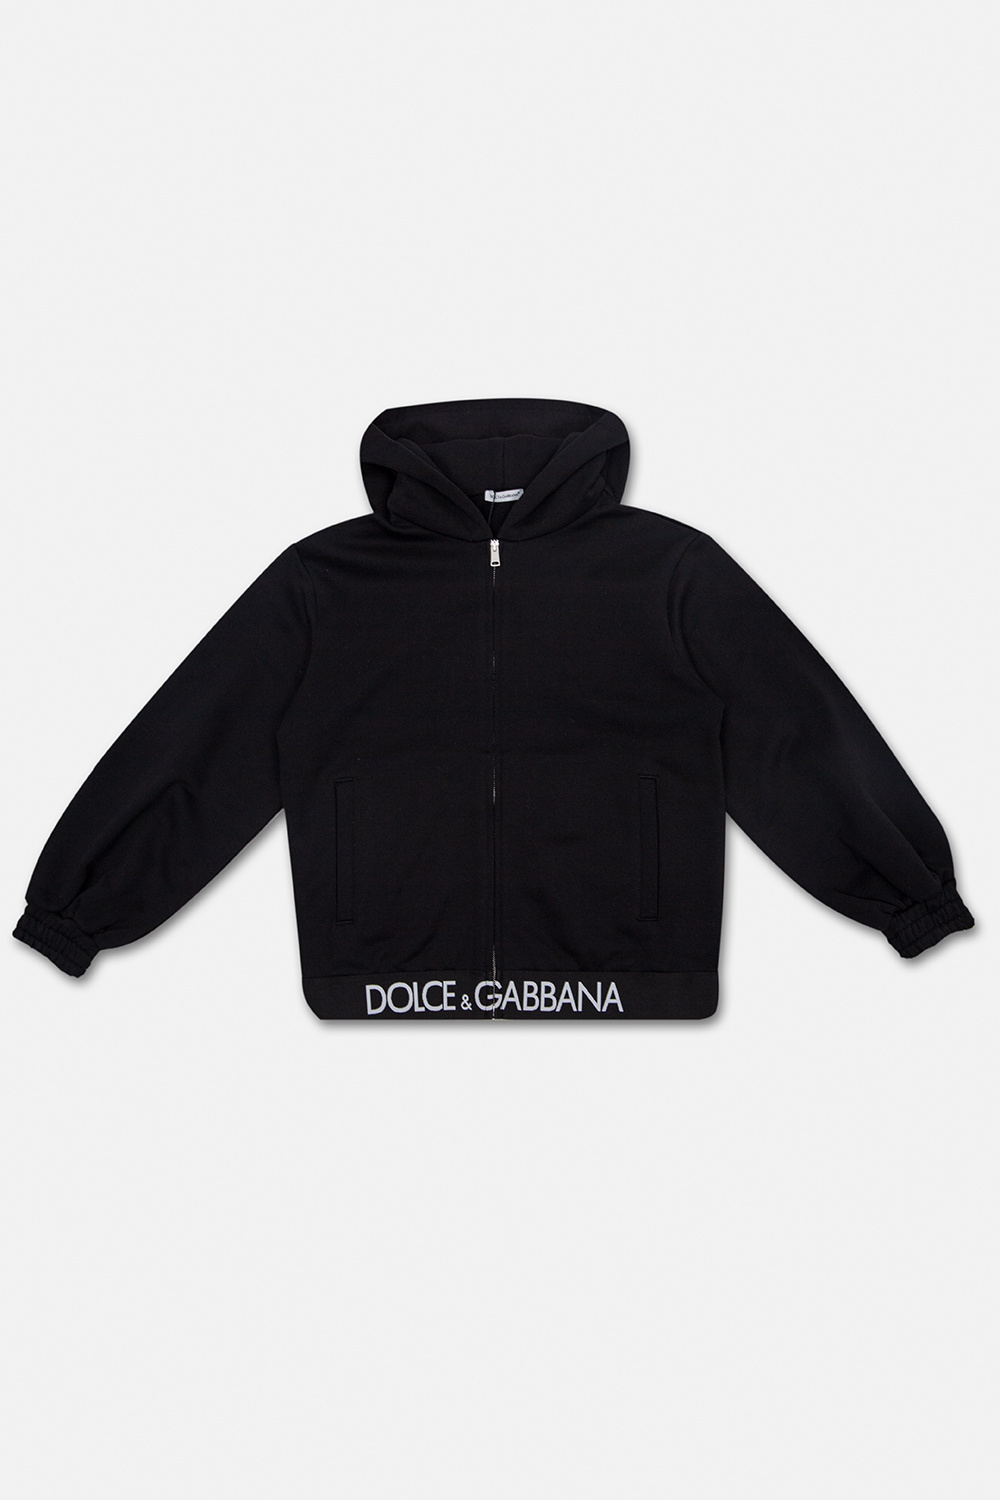 dolce lace & Gabbana Kids Zip-up hoodie